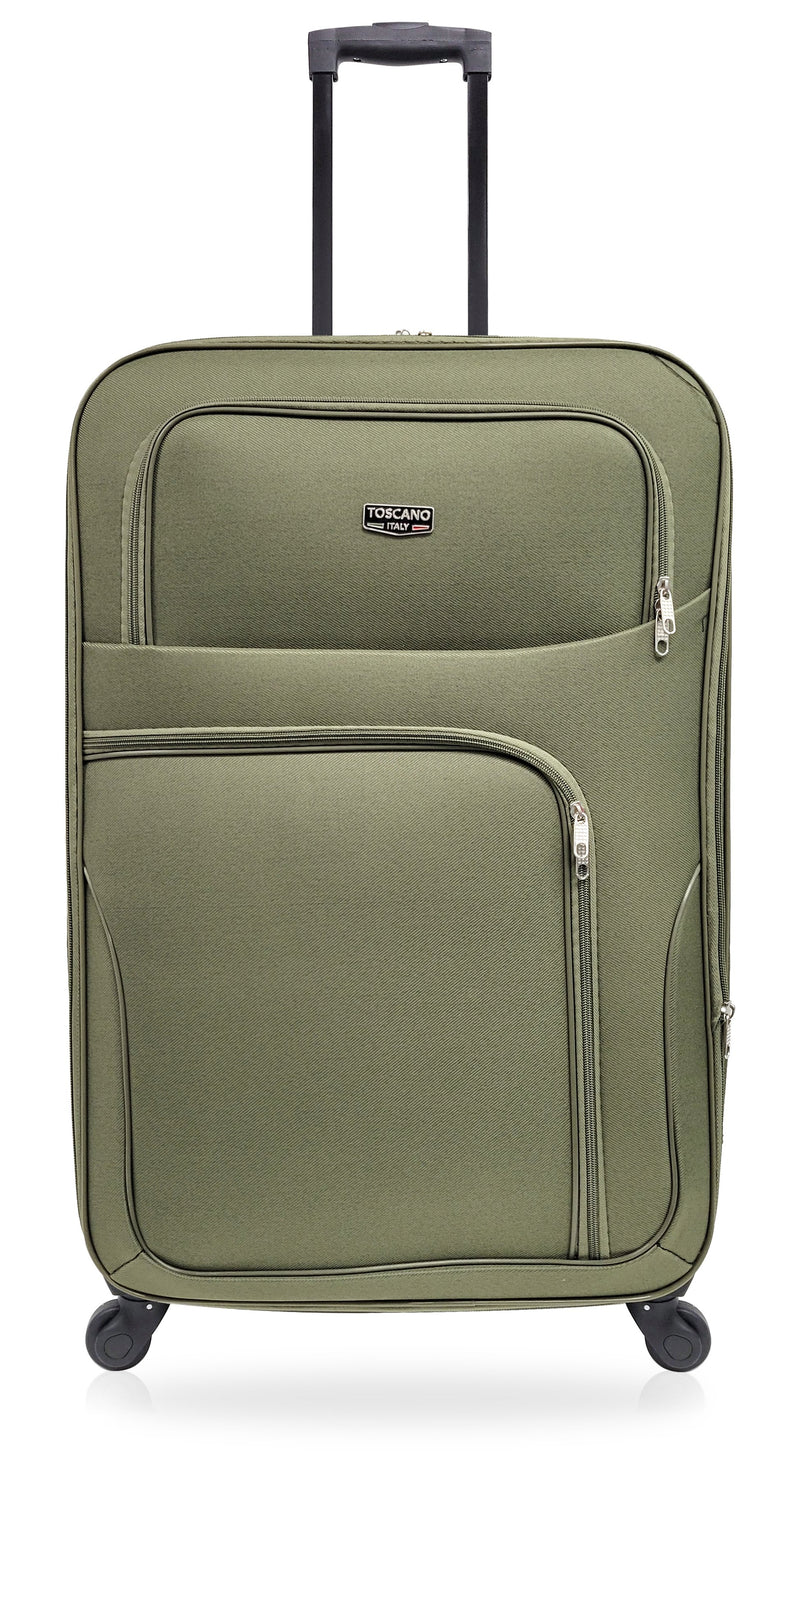 TOSCANO 32-inch Allacciare Lightweight Luggage Suitcase